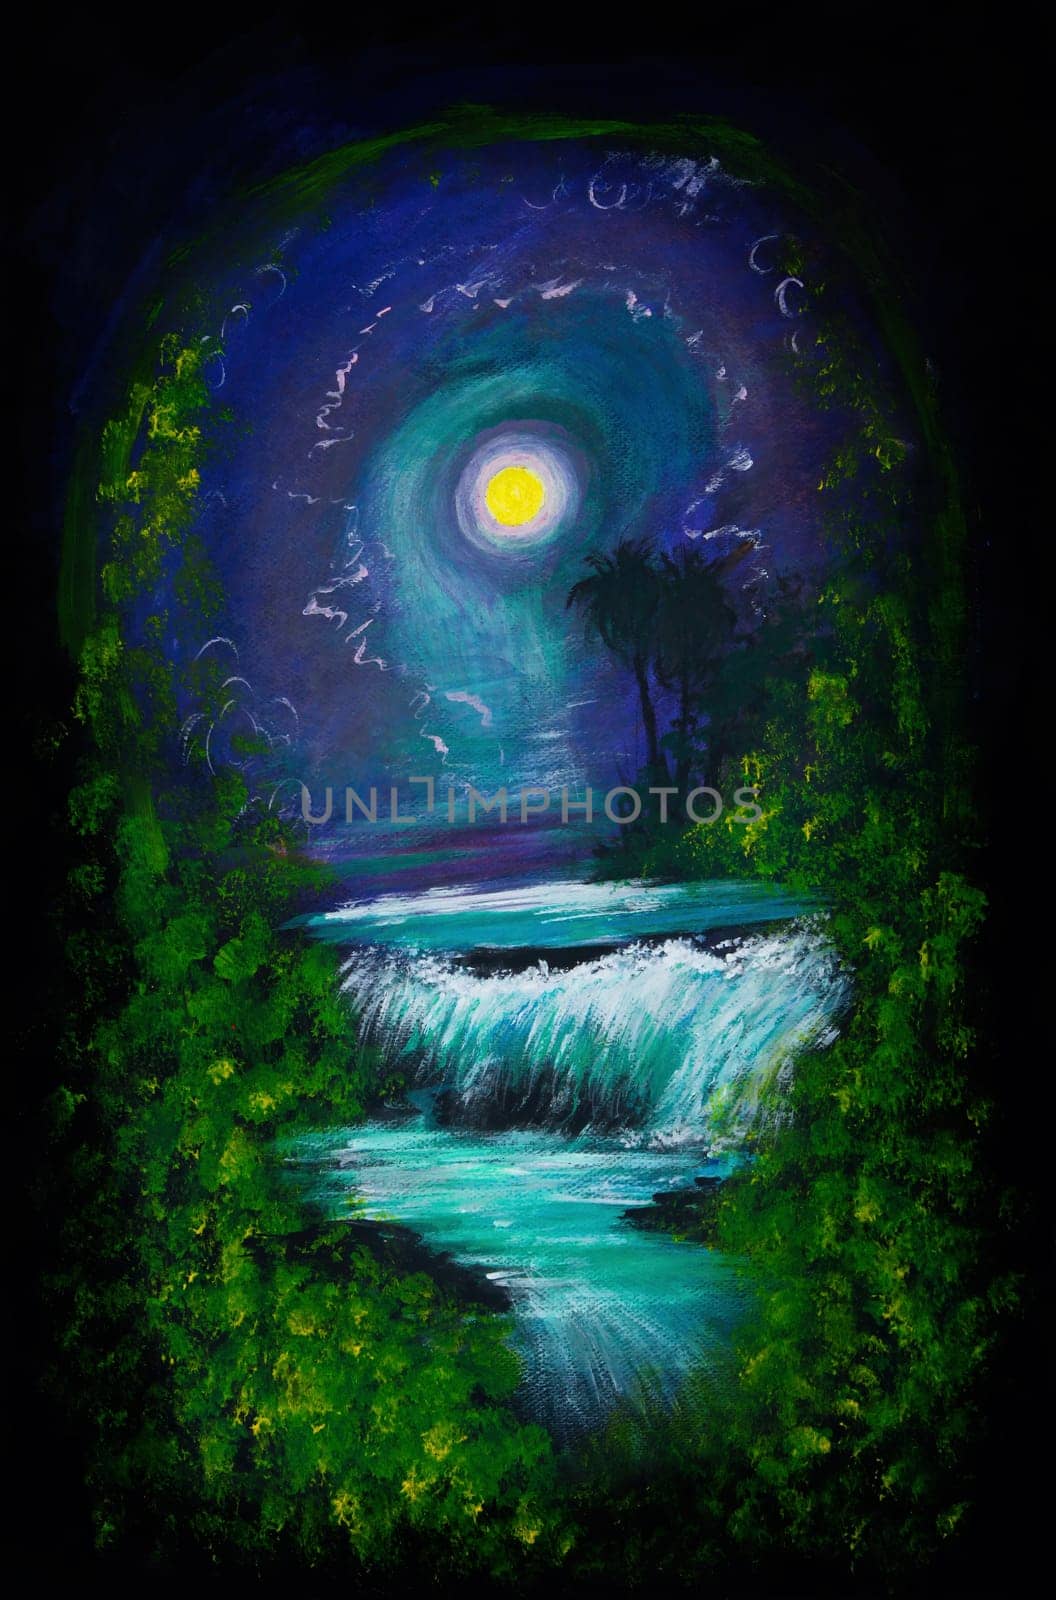 Mignight moon over forest waterfall by jarenwicklund